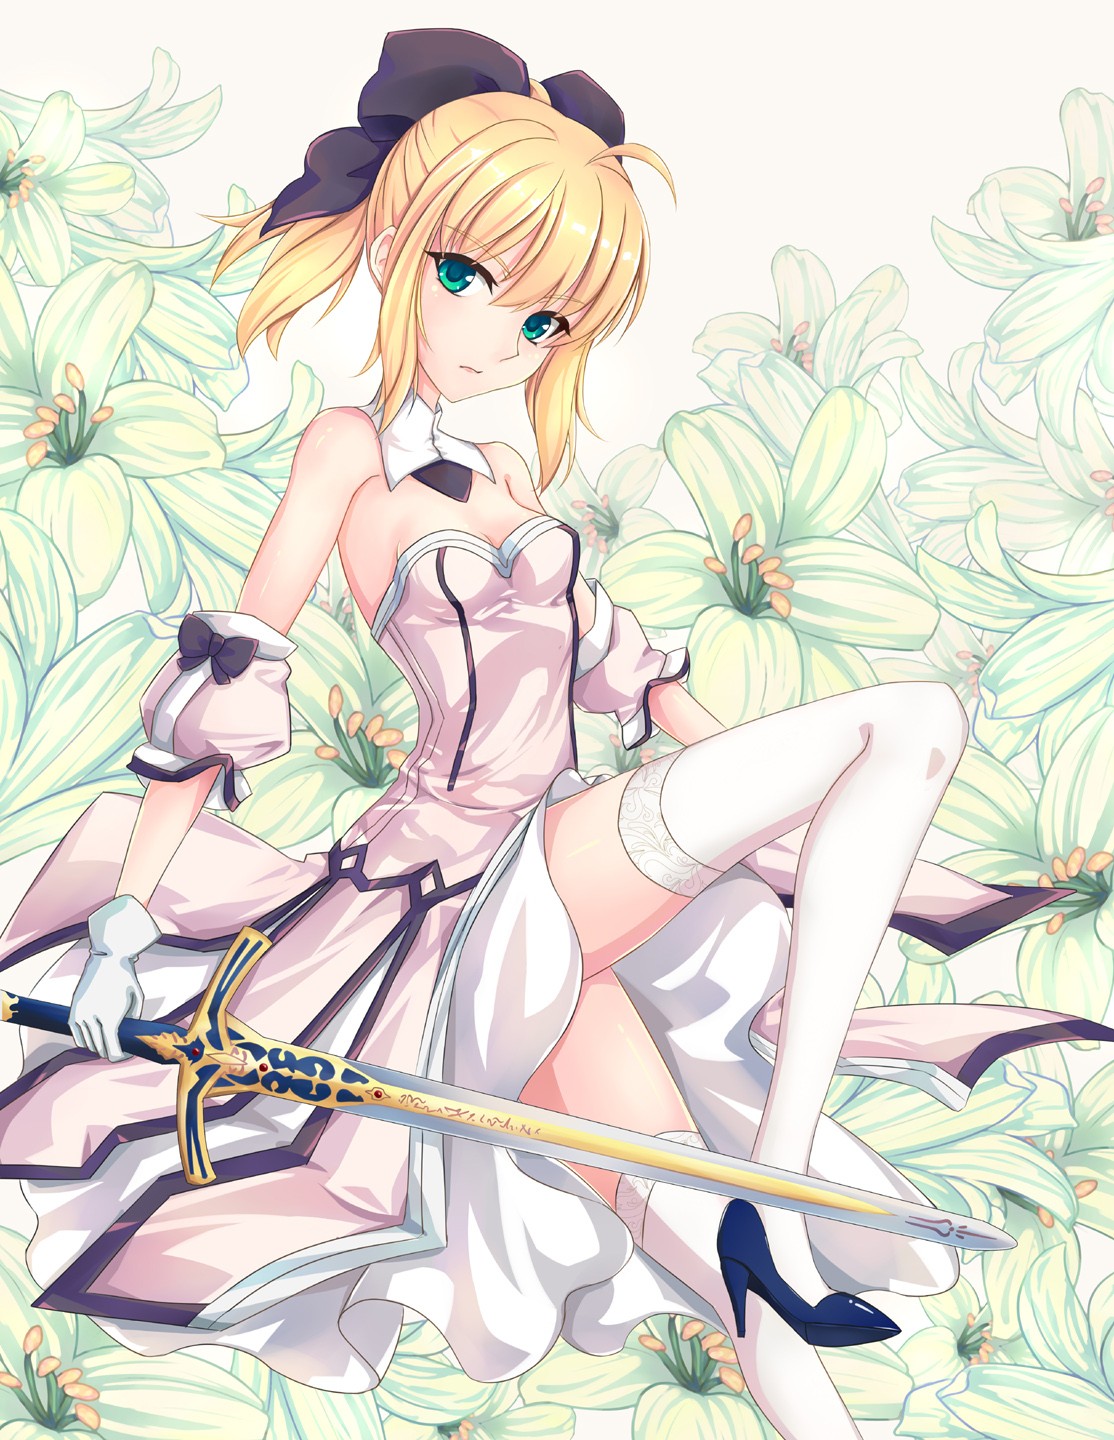 Anime 1114x1440 anime anime girls long hair Fate series Saber Lily sword weapon flowers stockings short hair blonde green eyes open shirt